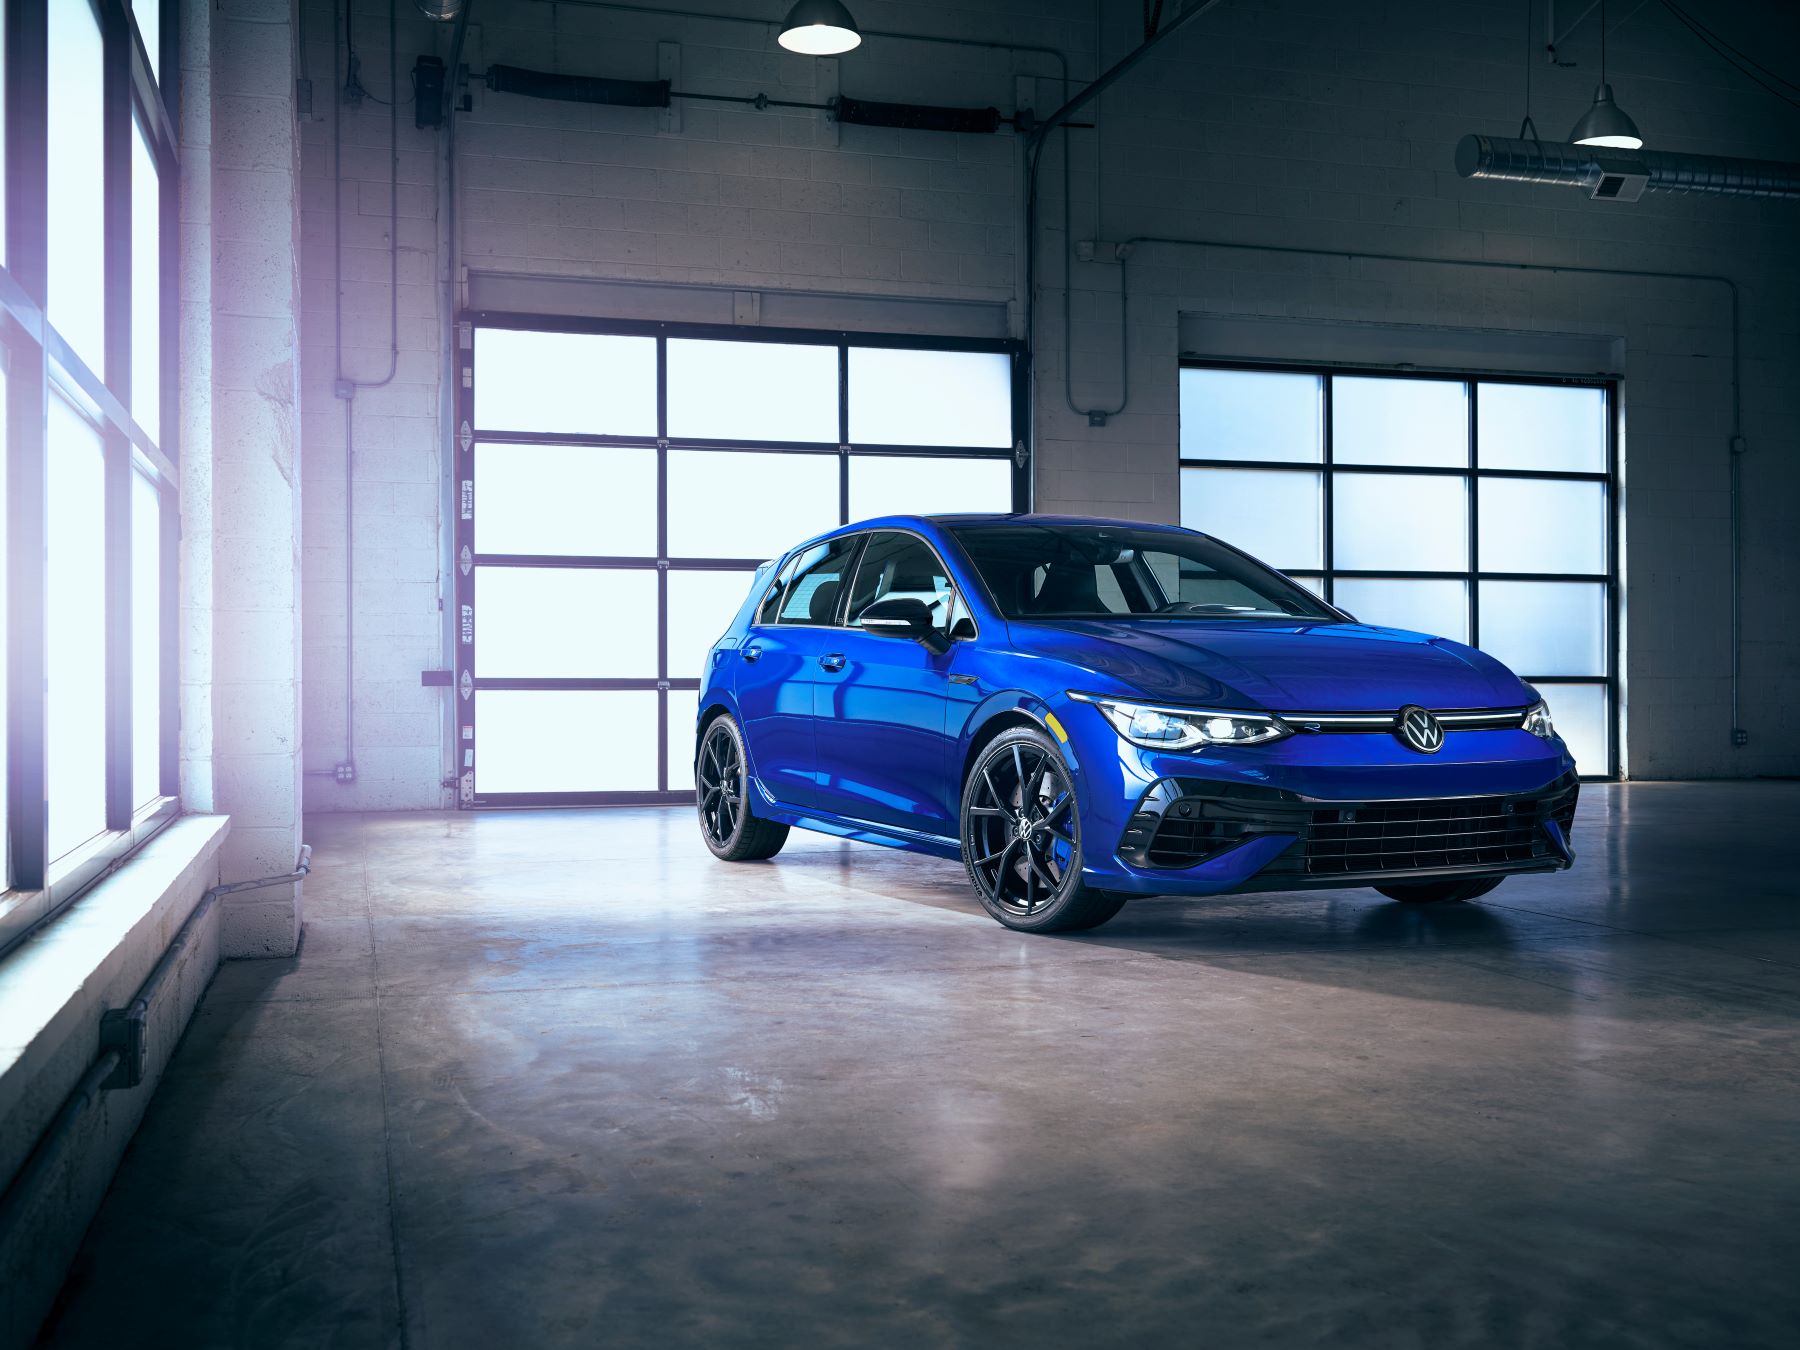 A blue Volkswagen Golf R 20th Anniversary Edition performance hatchback model parked in a garage